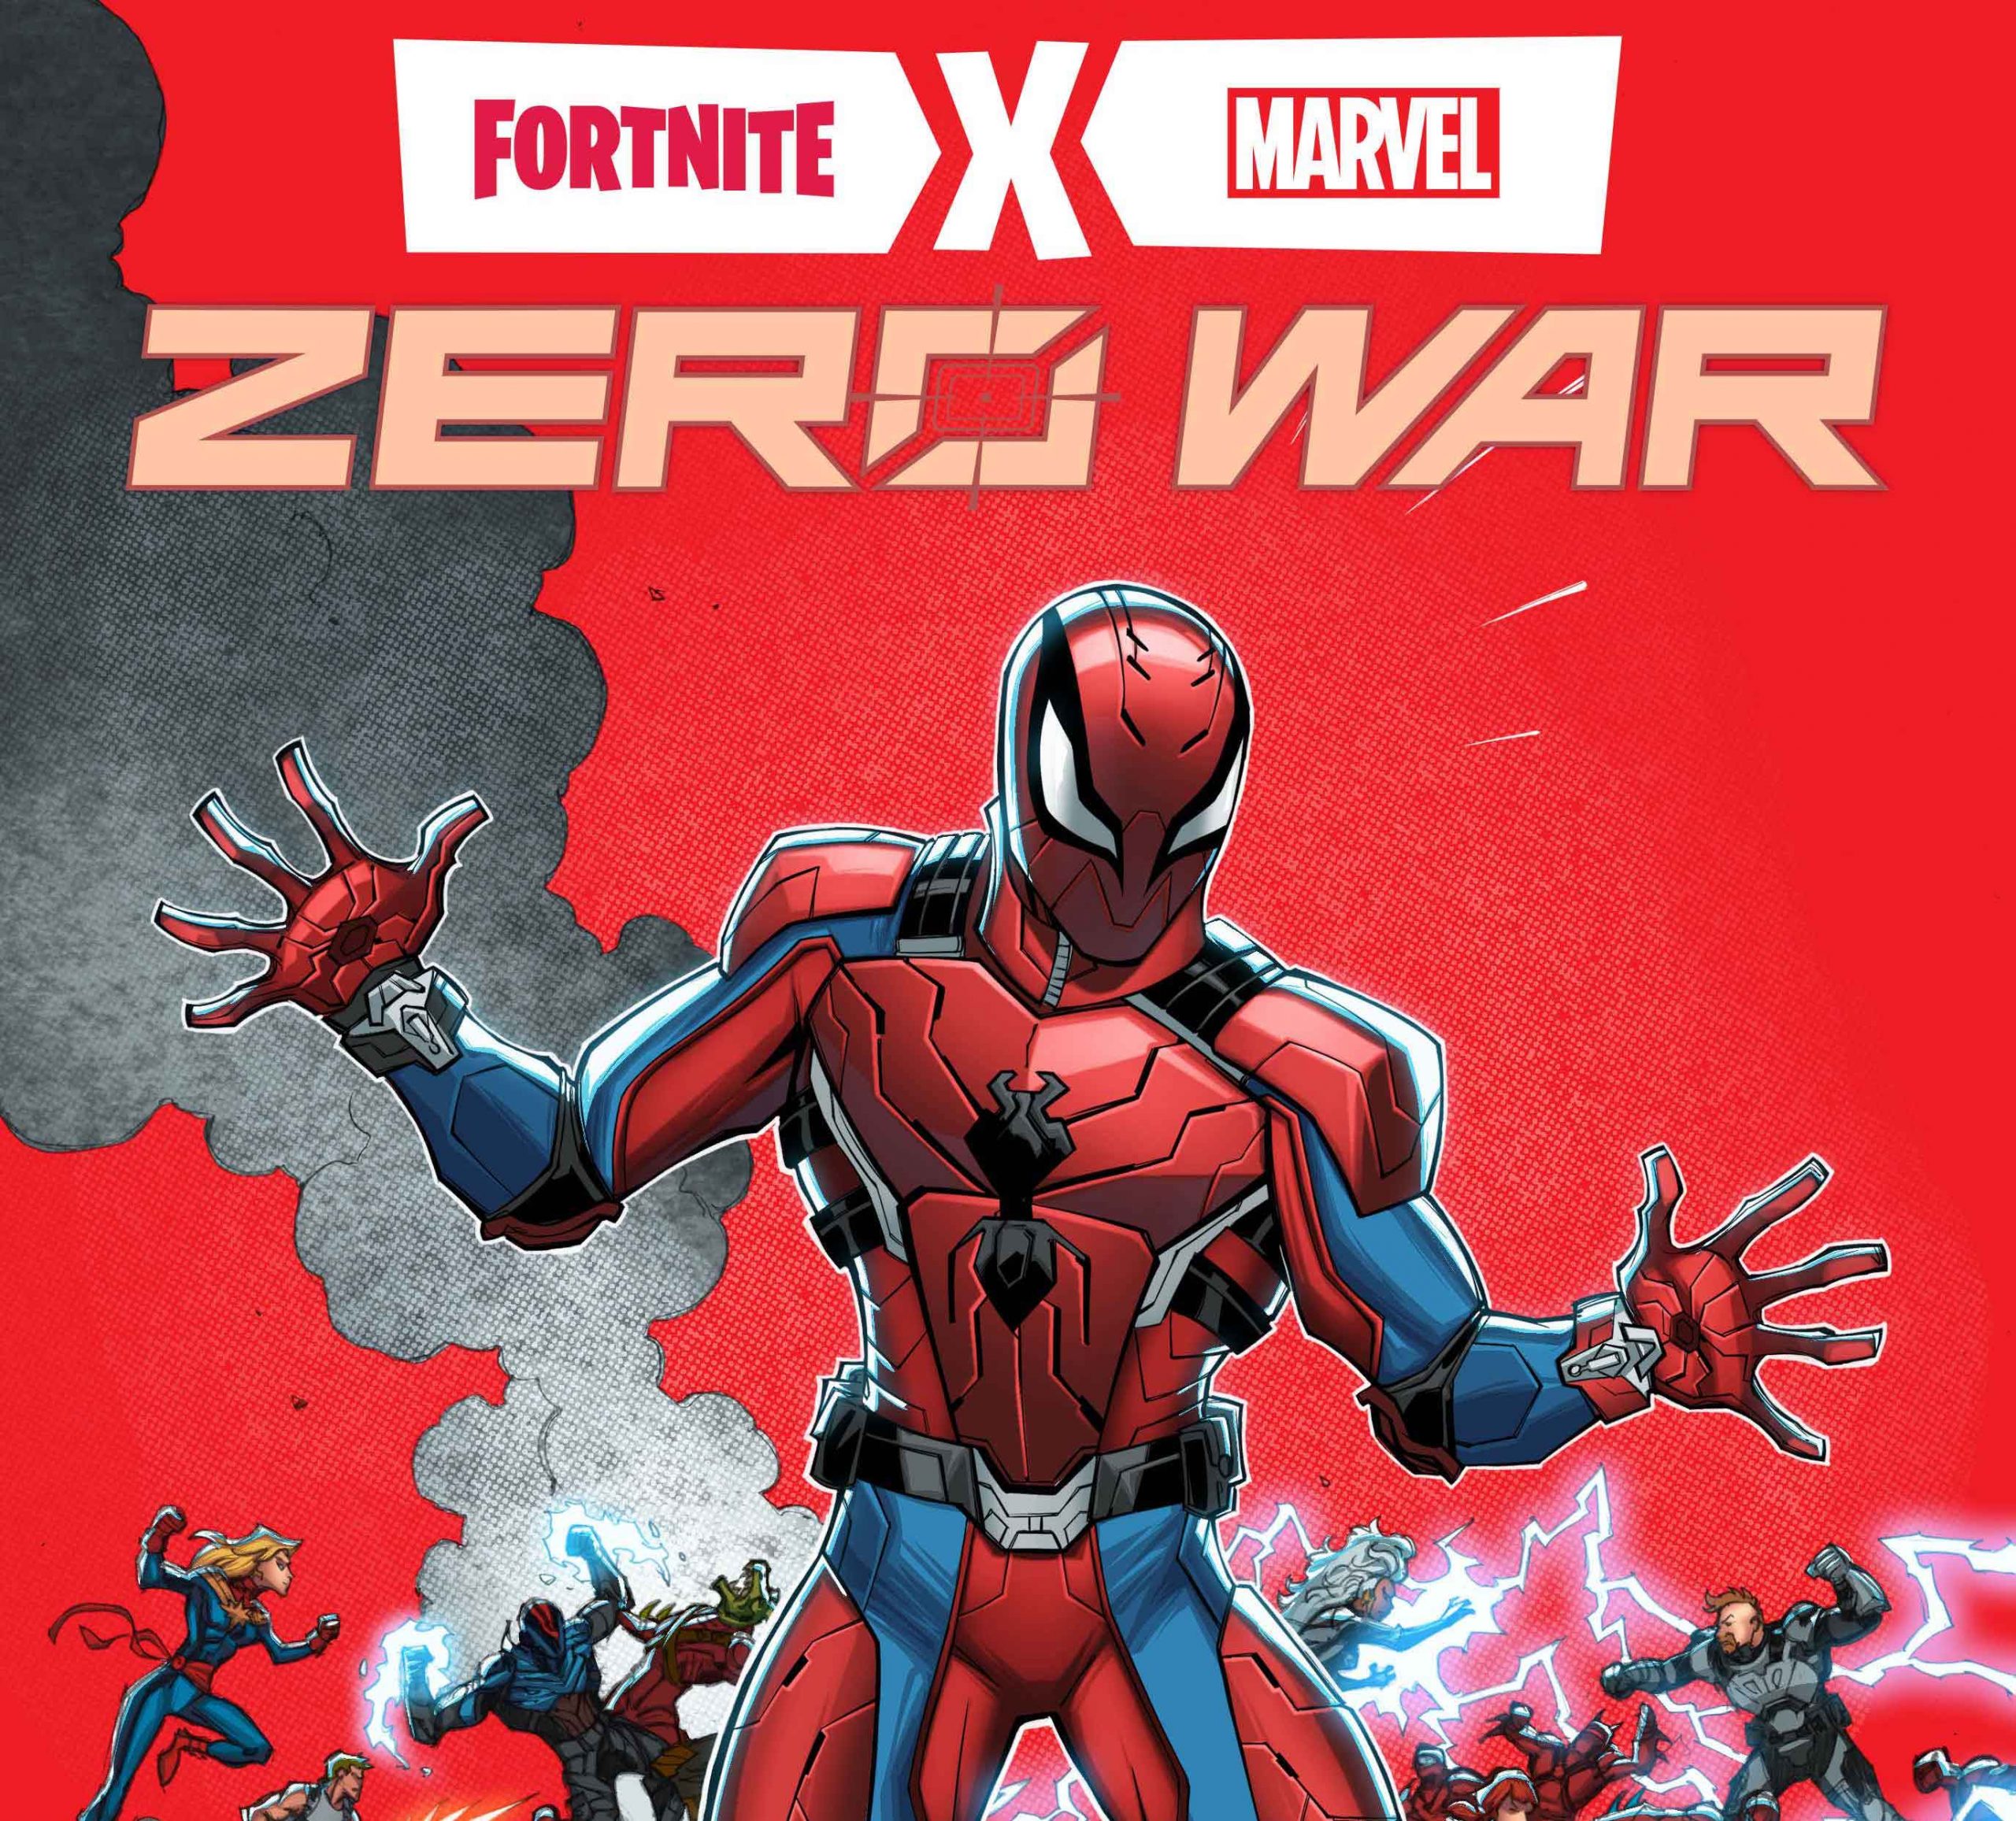 Marvel reveals new Spider-Man costume from 'Fortnite X Marvel: Zero War'